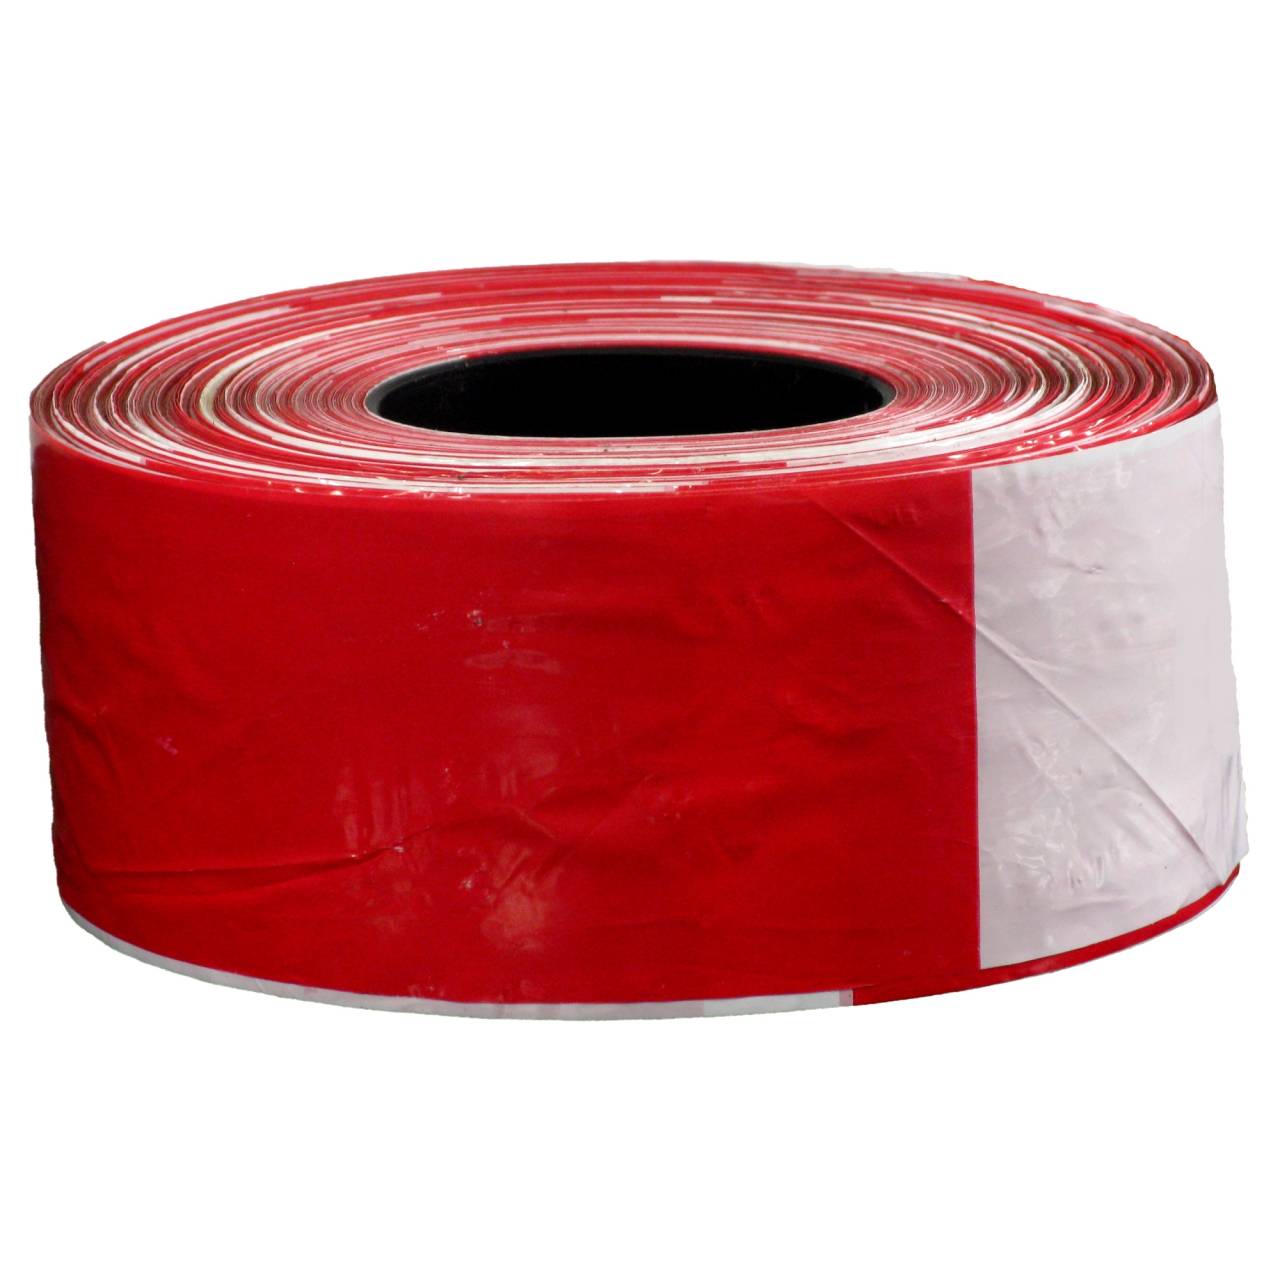 Absperrband / Flatterband rot-weiss / 80 mm breit